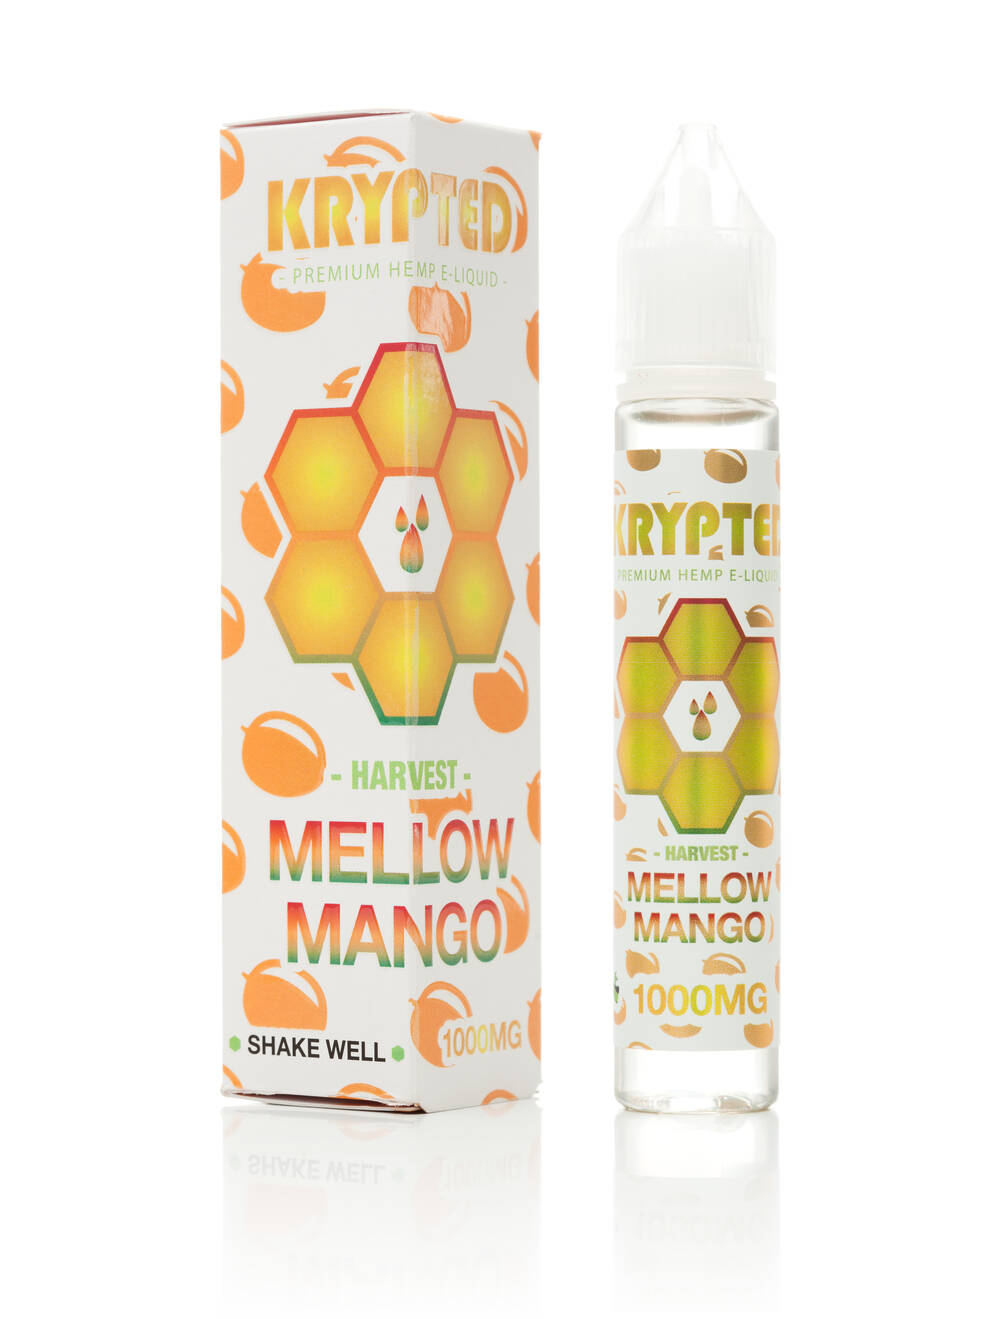 Mellow Mango CBD E-Liquid